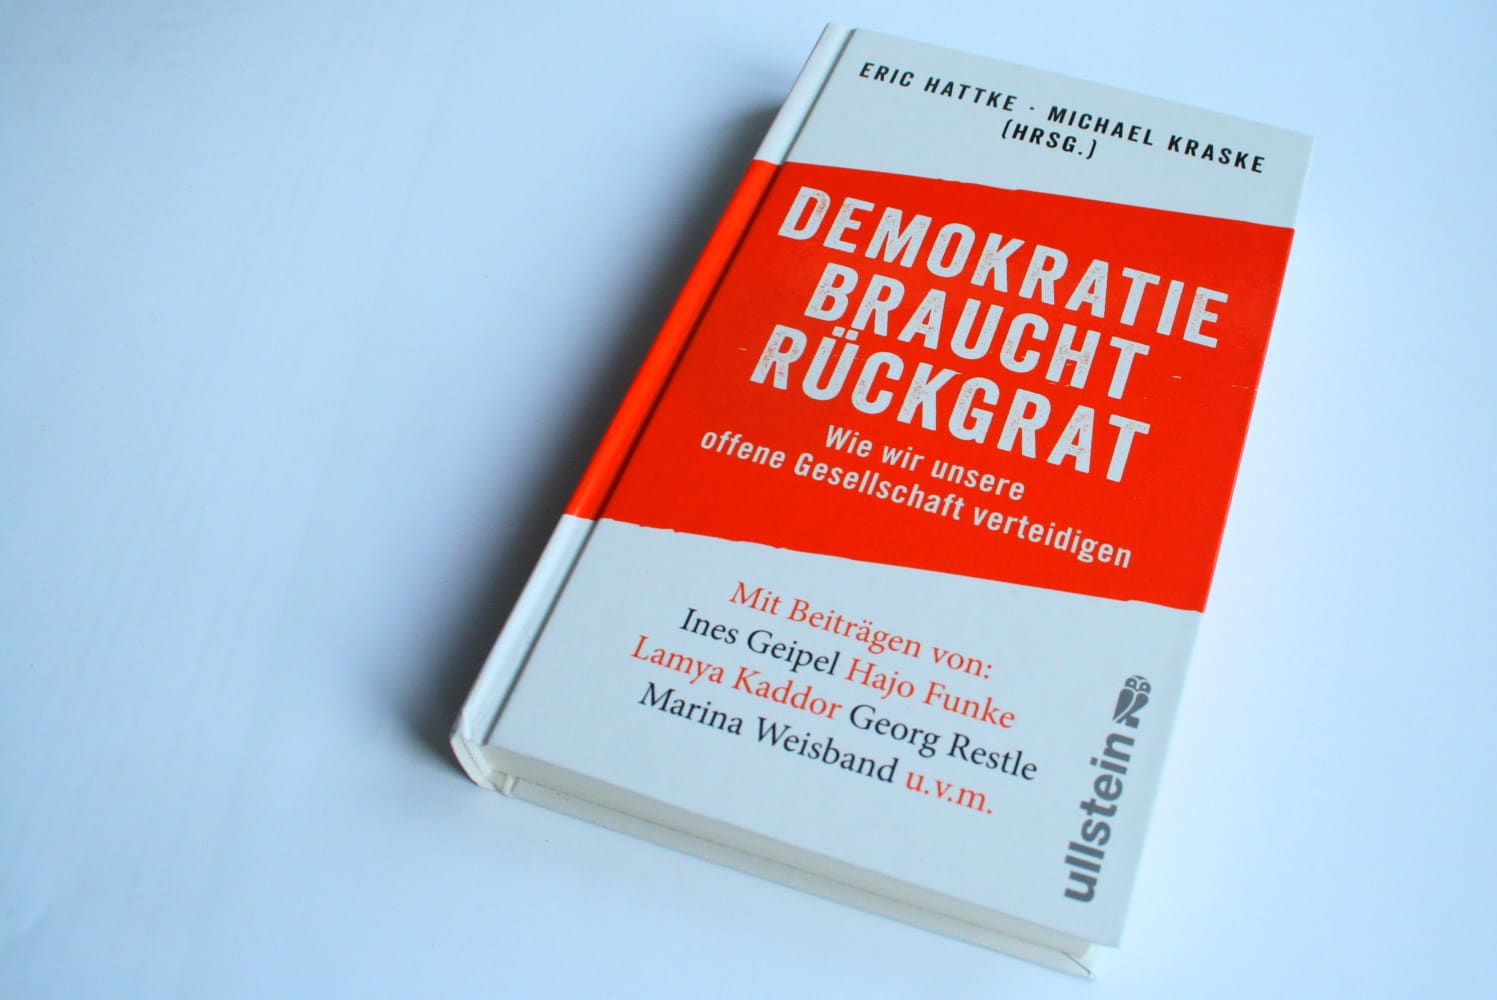 Eric Hattke, Michael Kraske (Hrsg.): Demokratie braucht Rückgrat. Foto: Ralf Julke